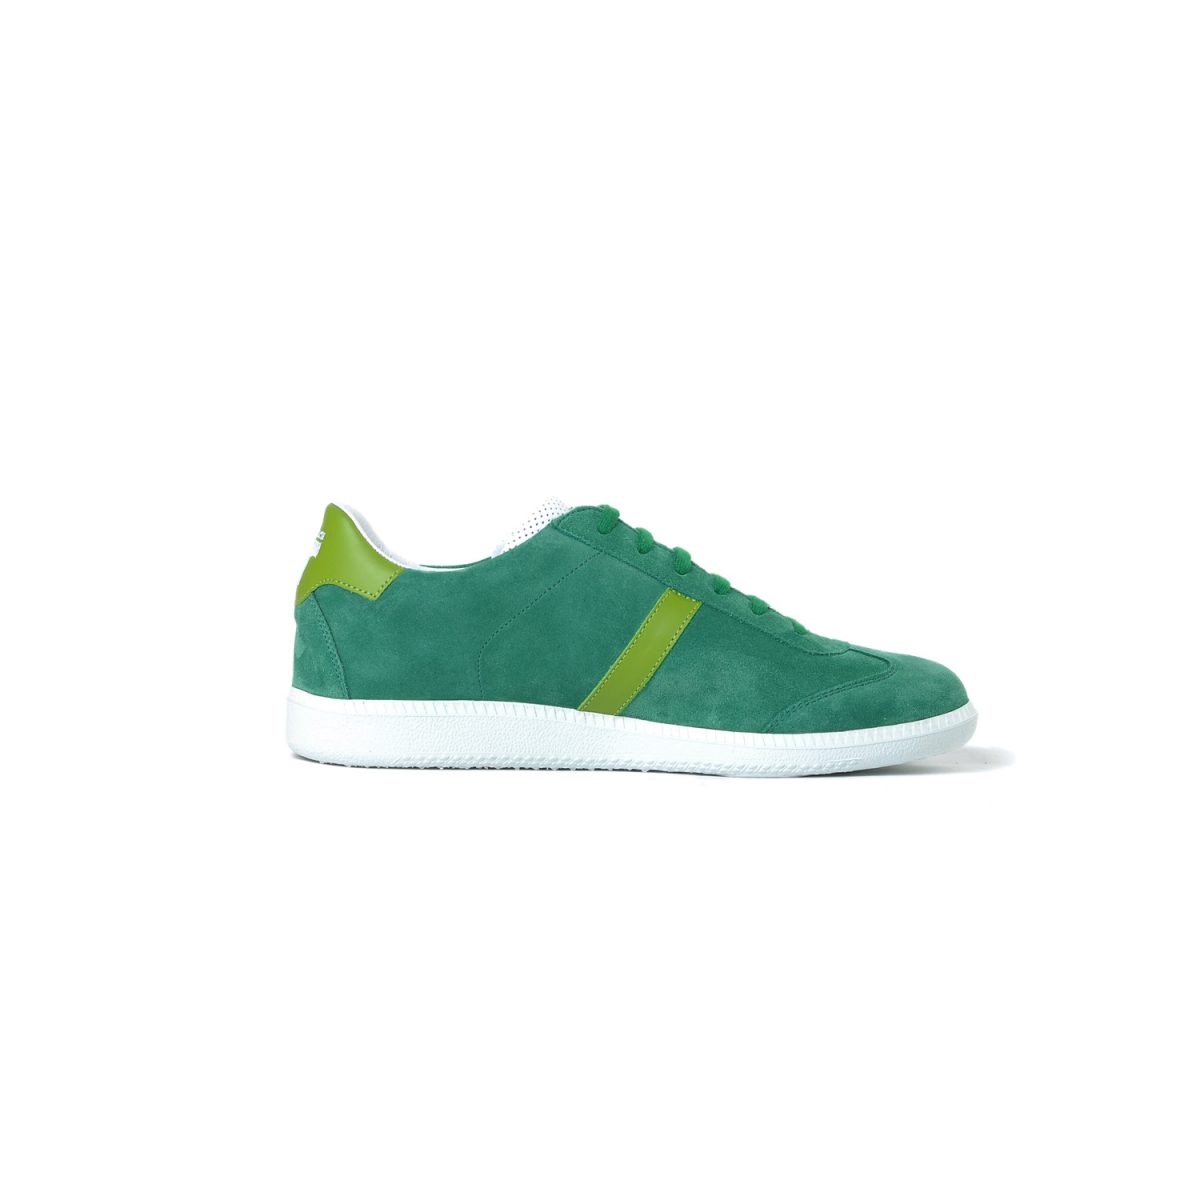 Tisza cipő - Comfort - Zöld-lime